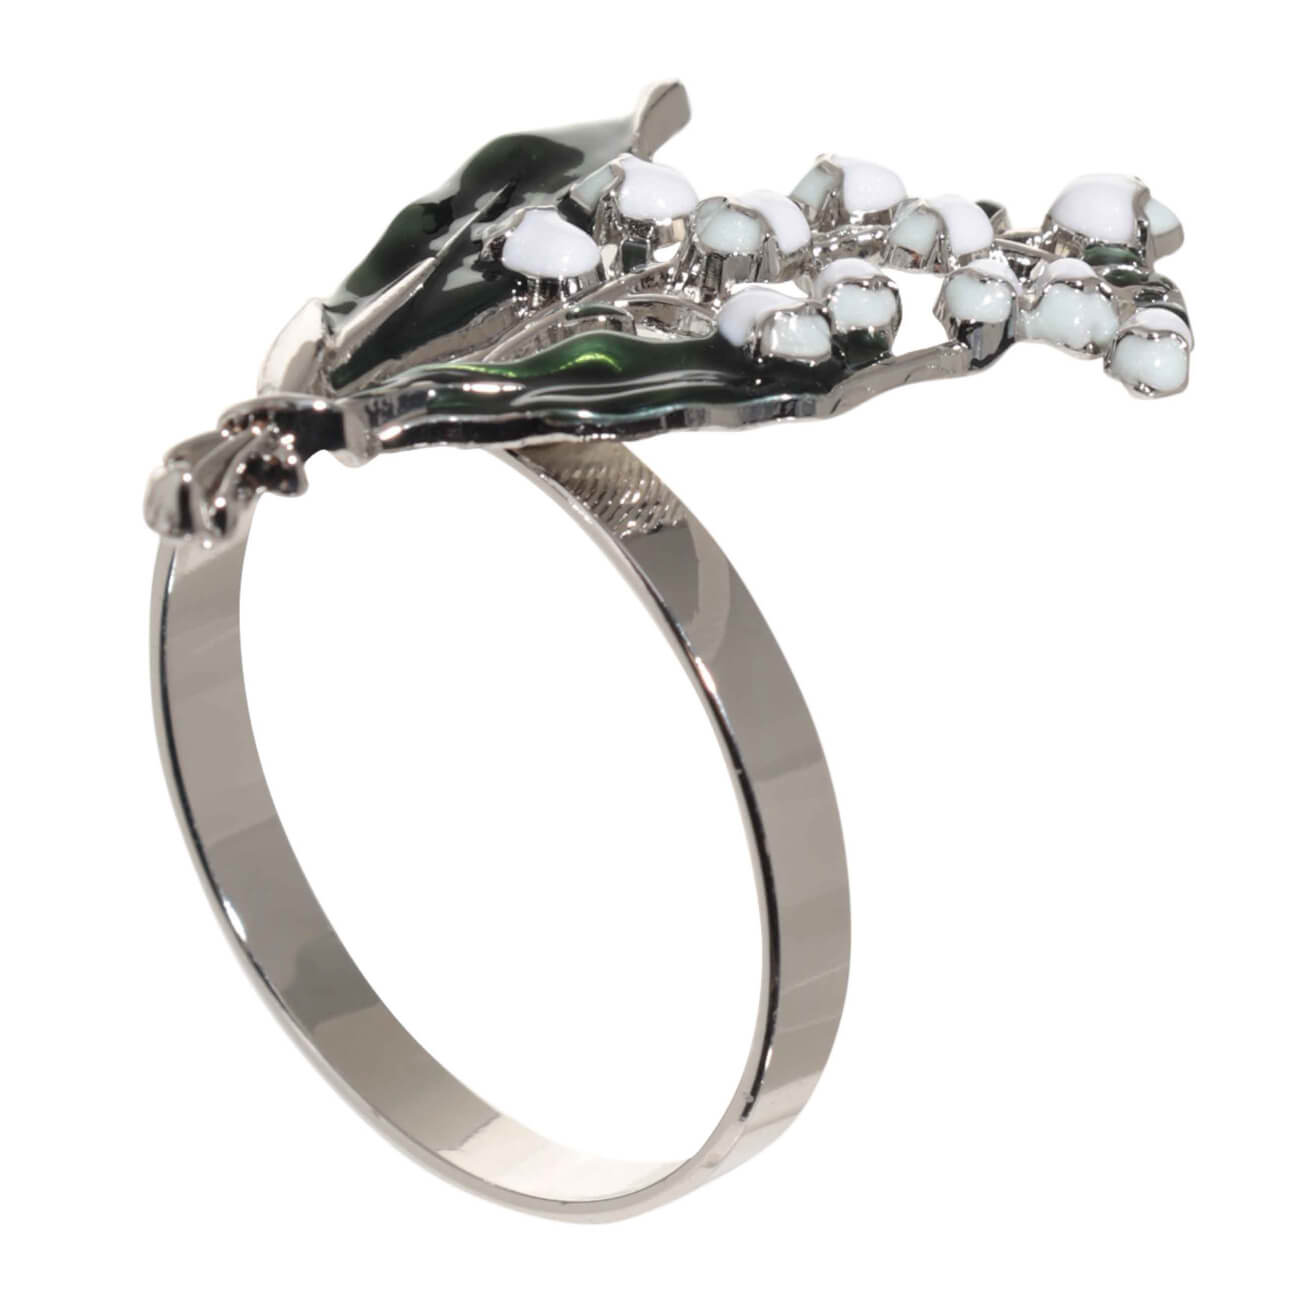 Кольцо для салфеток, 5 см, металл, зелено-серебристое, Ландыш с листьями, May-lily кольцо